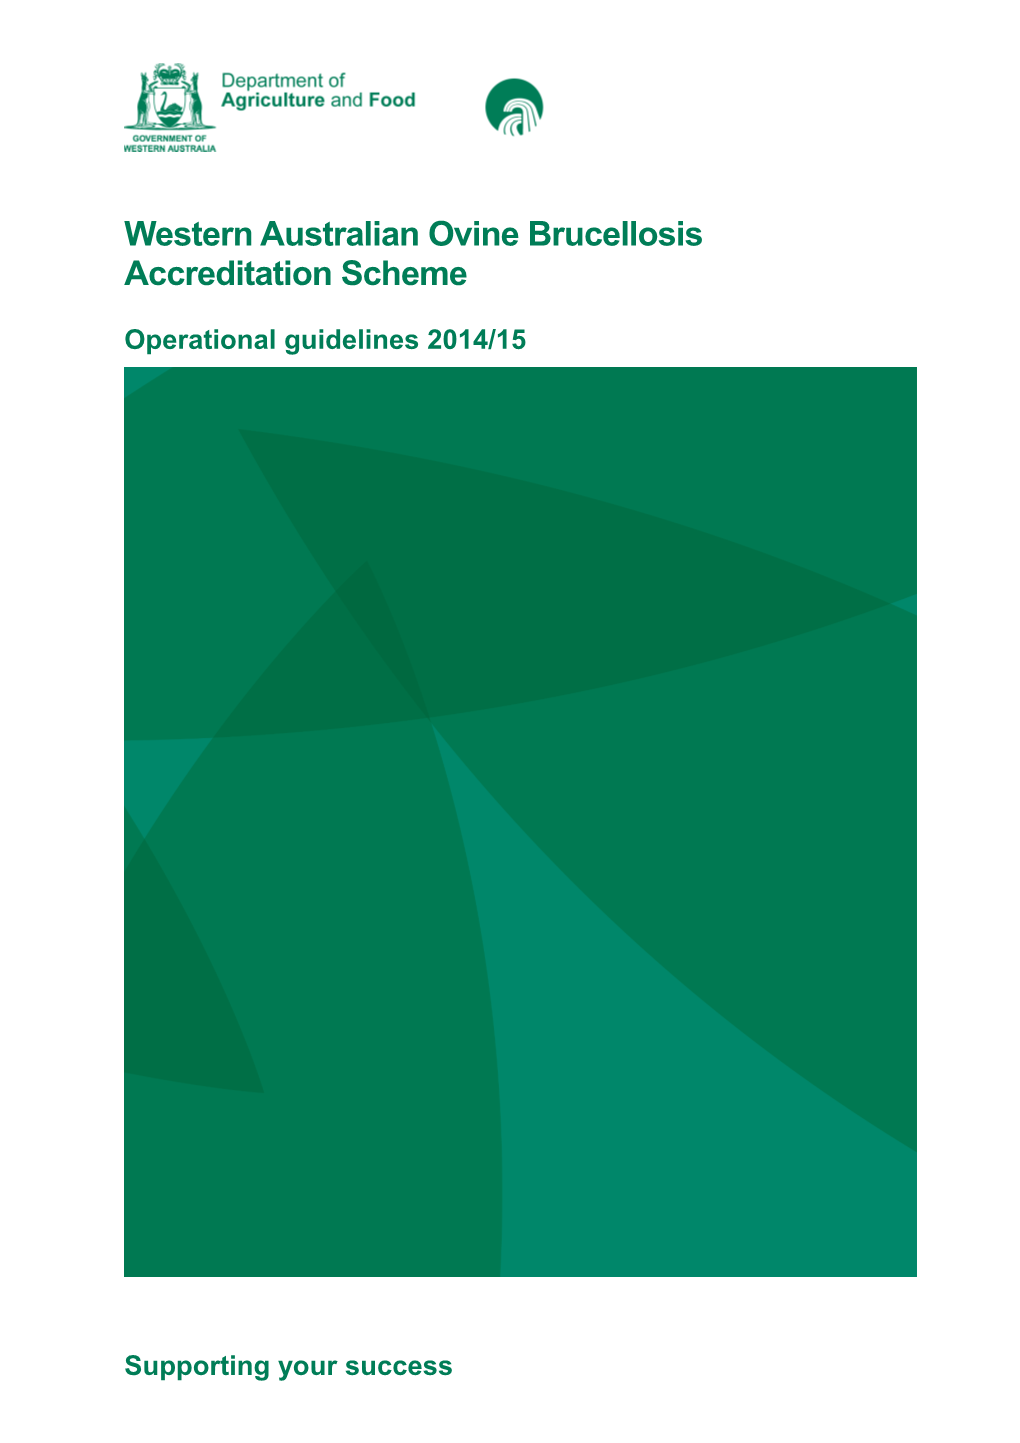 Western Australian Ovine Brucellosis Accreditation Scheme